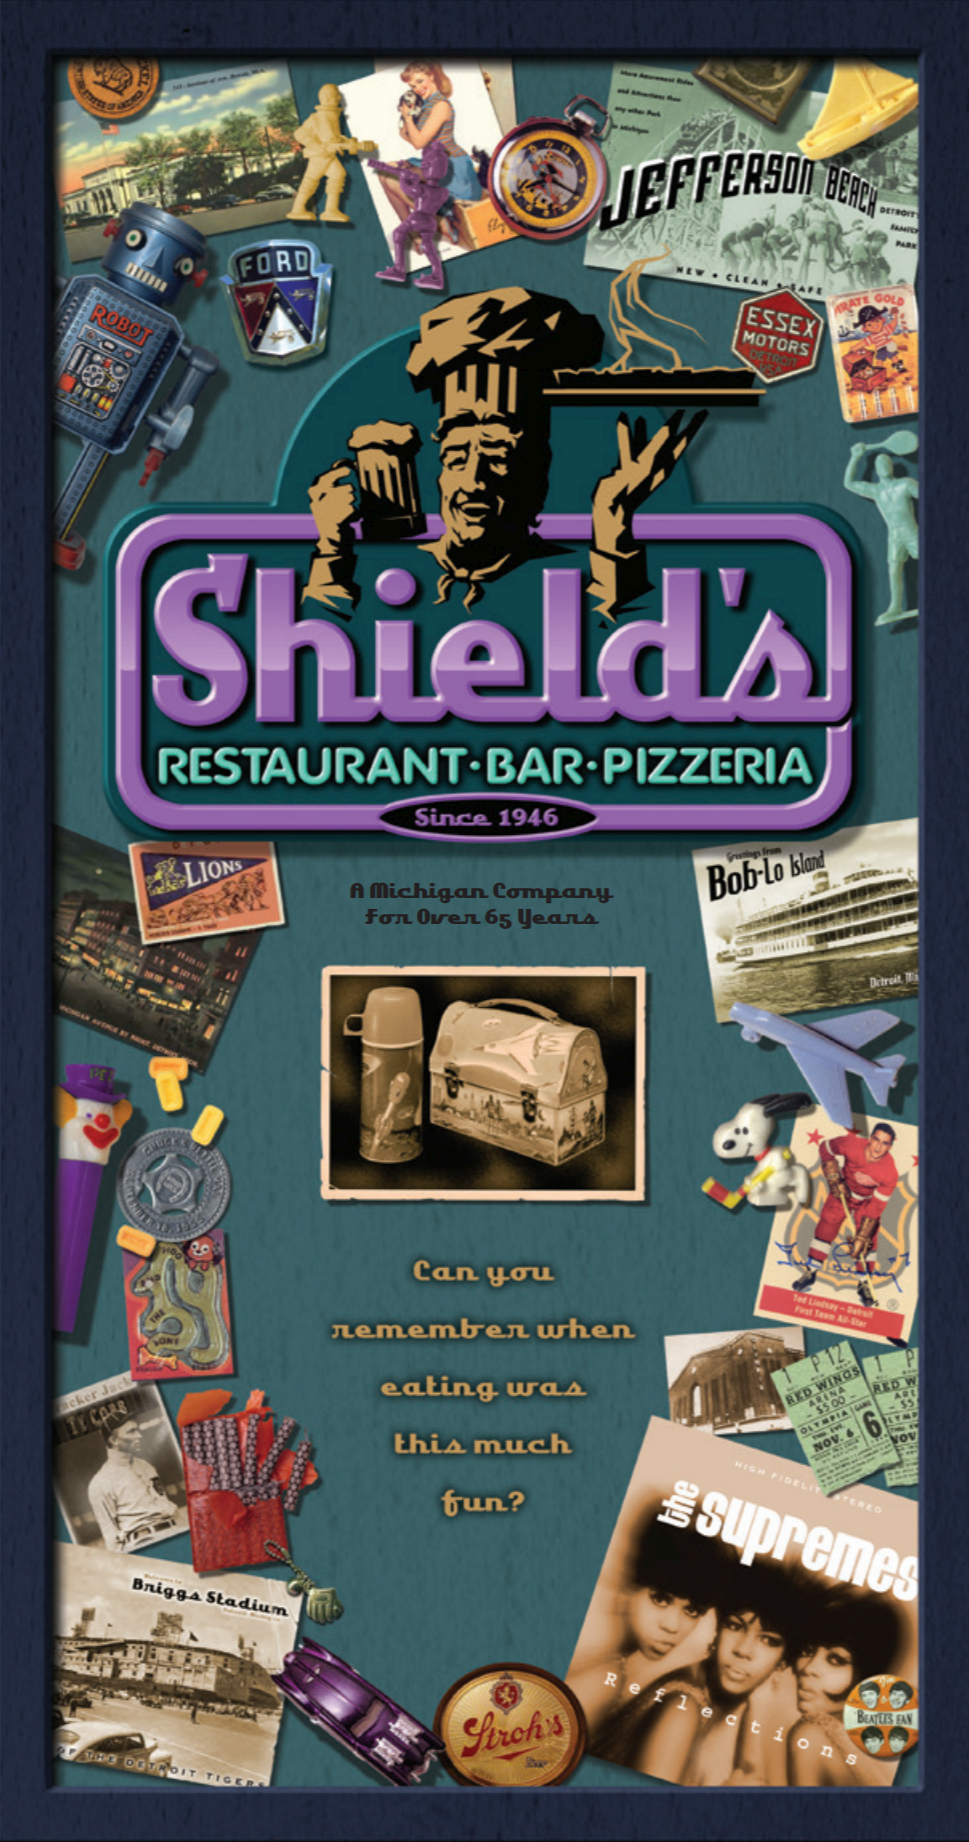 the menu at Shield's in Michigan